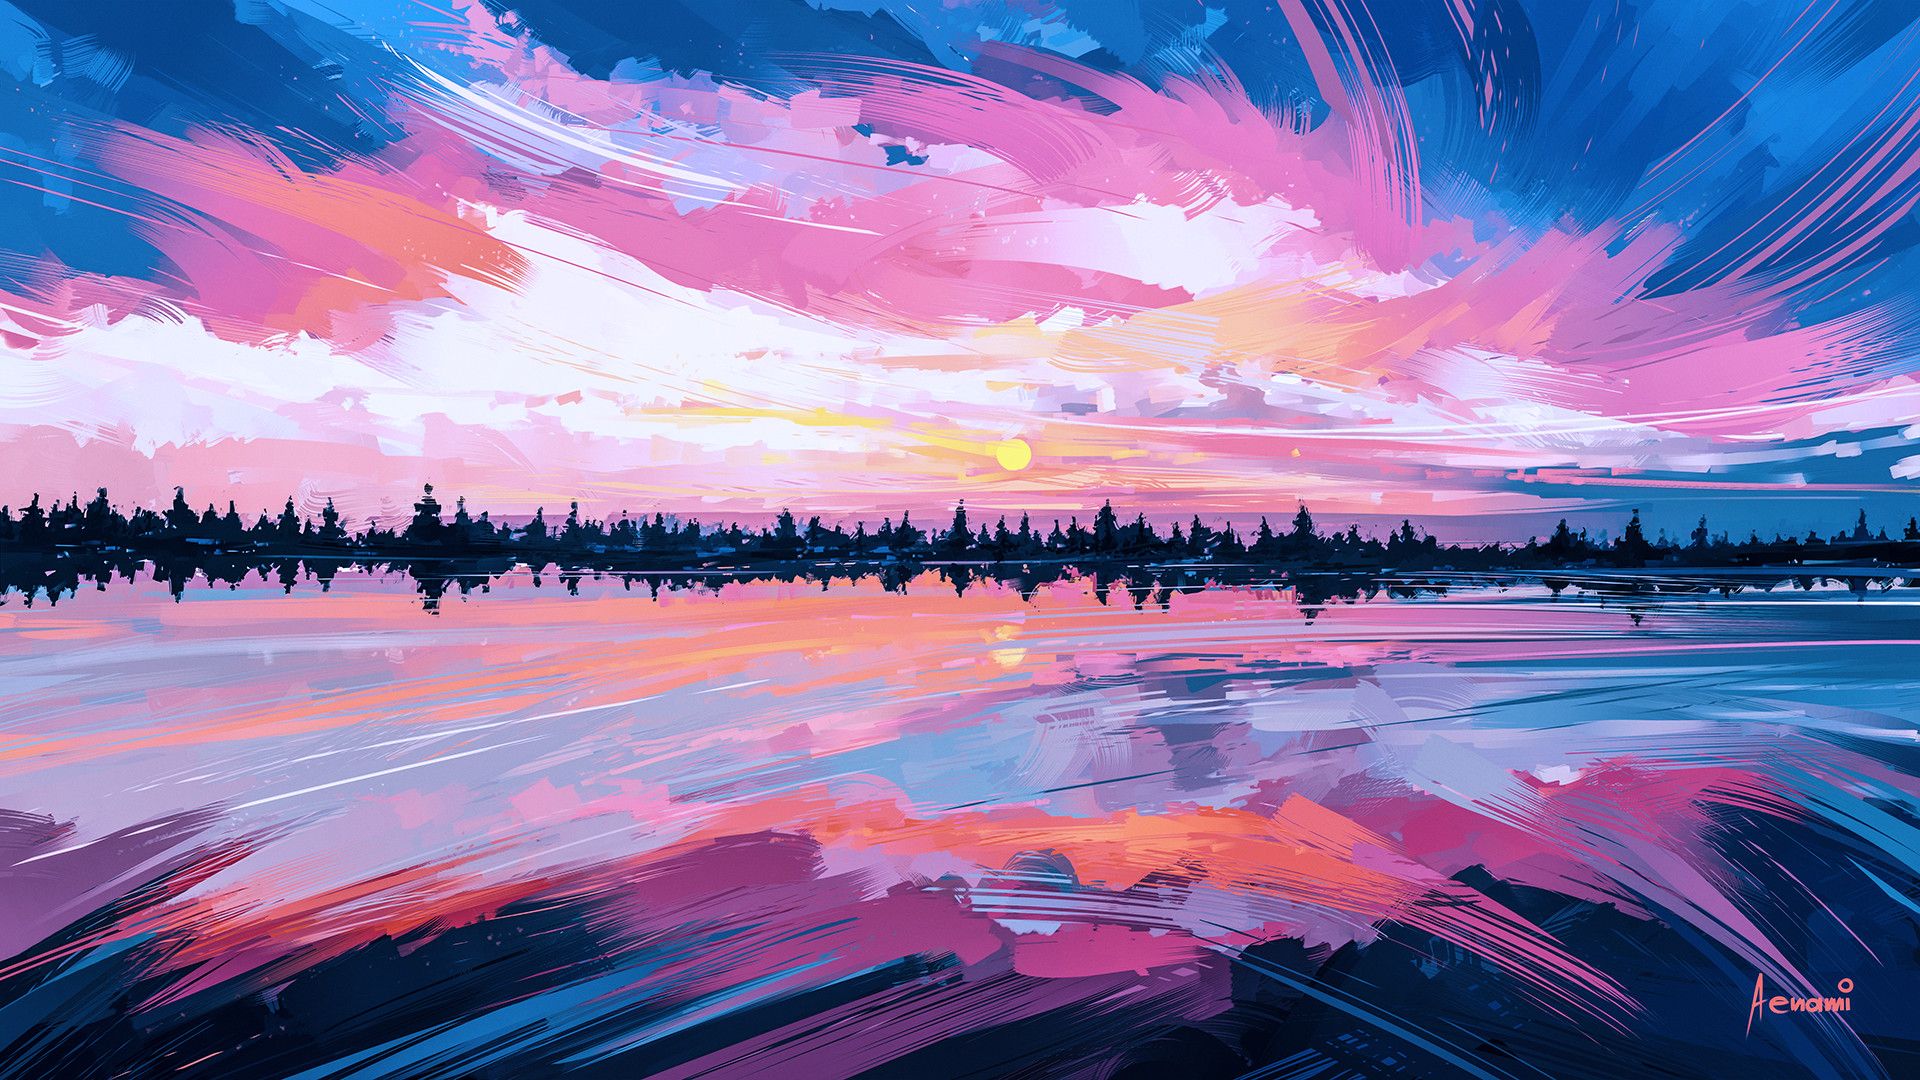 Lake River Reflection Clouds, HD Artist, 4k Wallpaper, Image